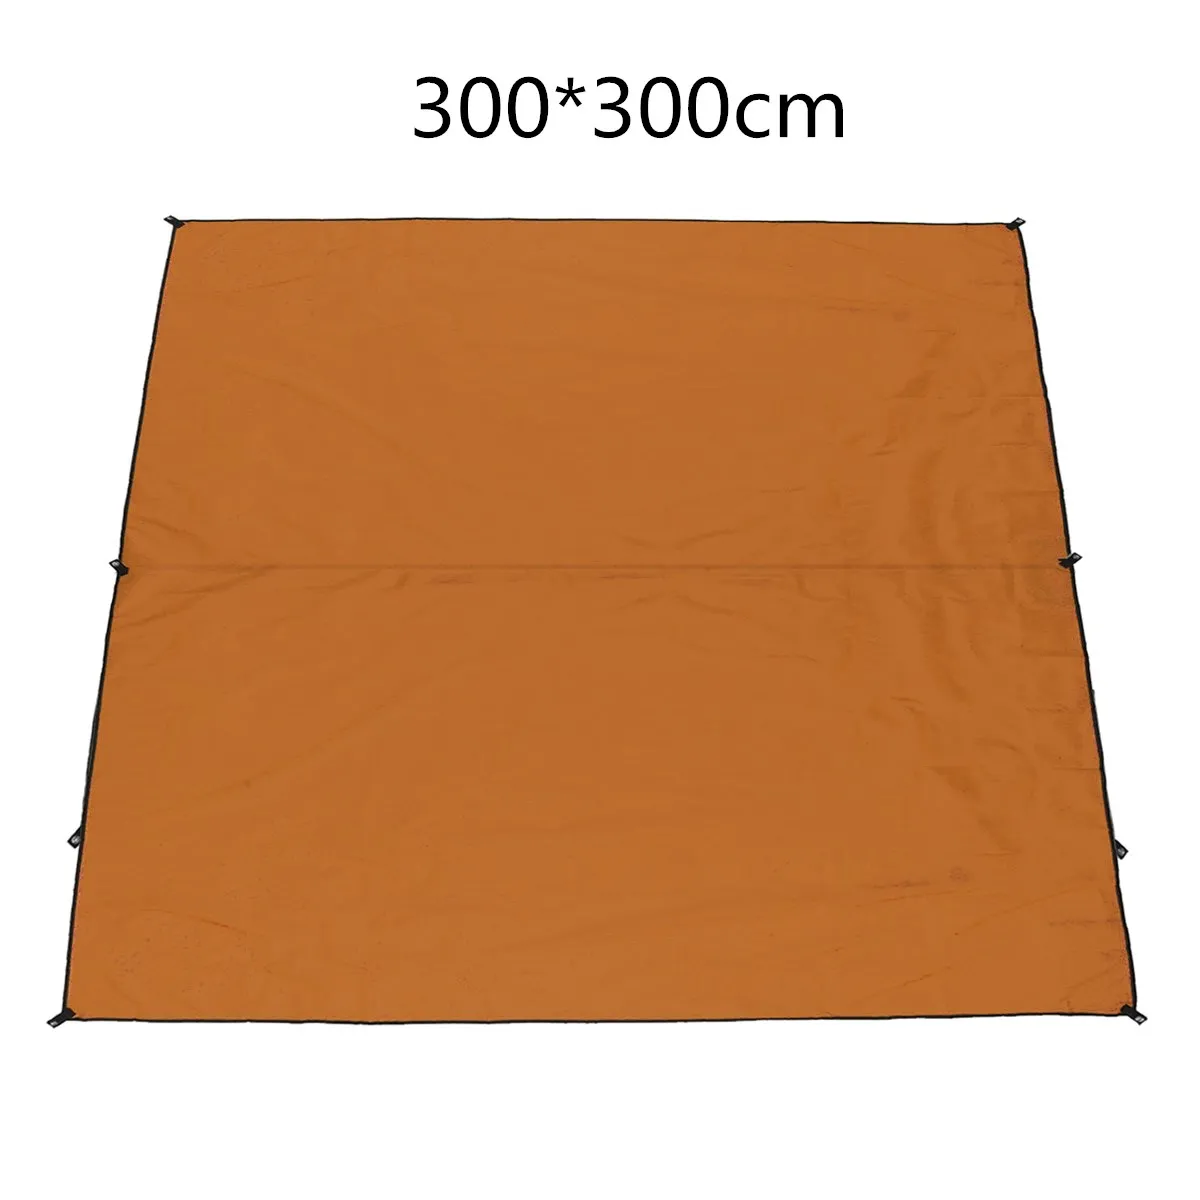 4 размера тент солнцезащитный навес пляж Открытый Кемпинг Сад навес от солнца навес гамак дождь муха брезент водонепроницаемый тент - Цвет: 300x300cm Orange